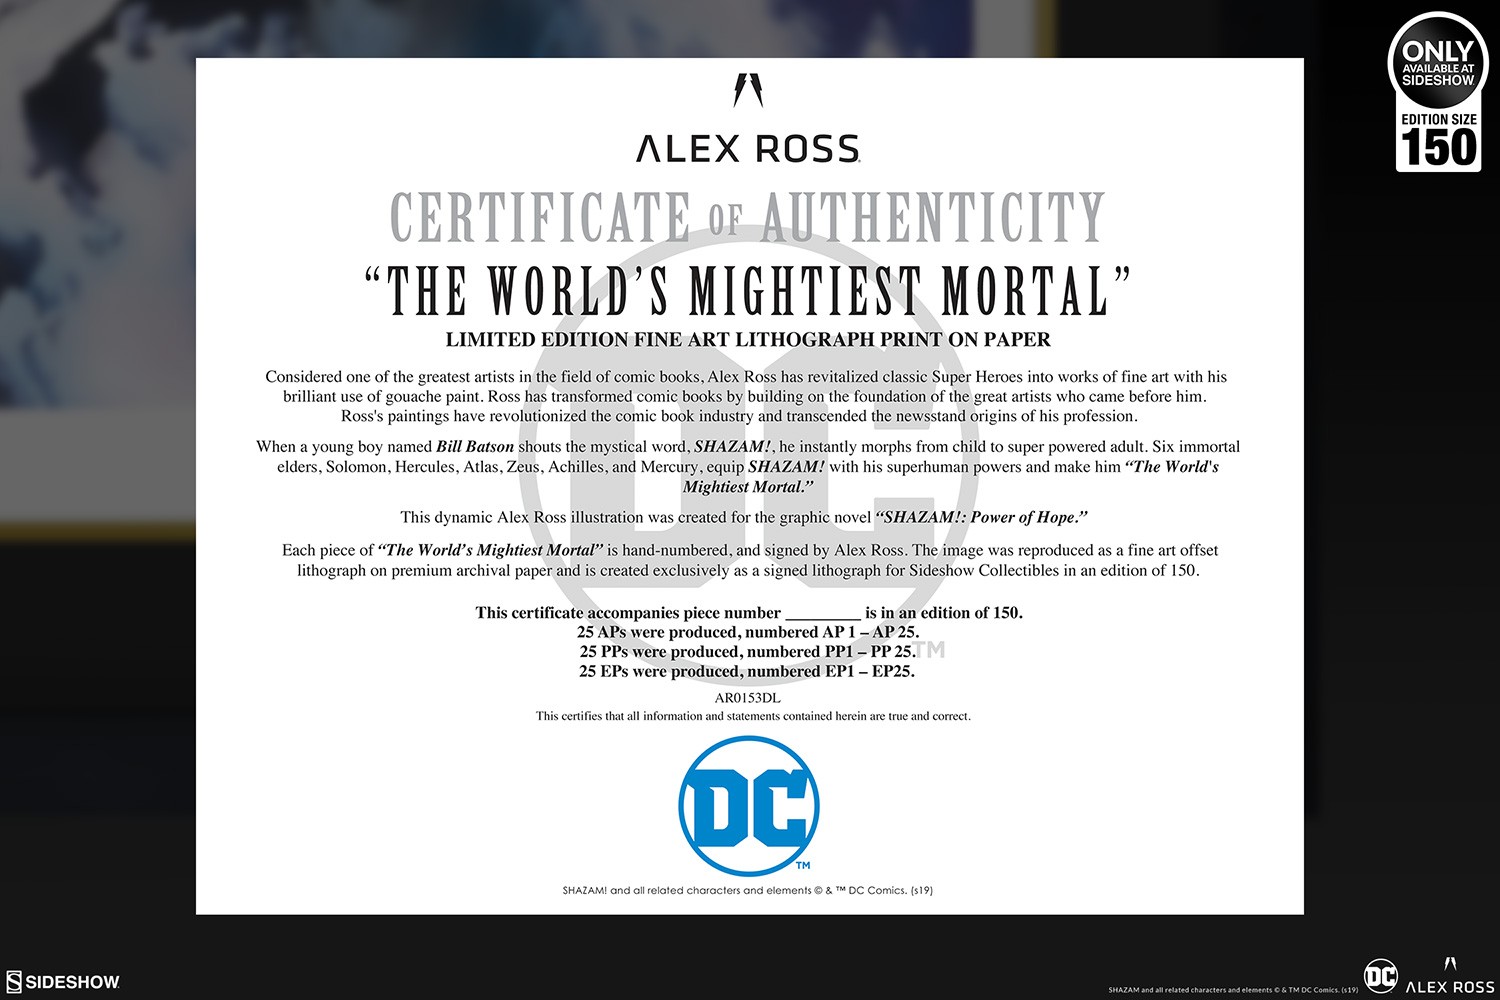 Shazam! The World's Mightiest Mortal